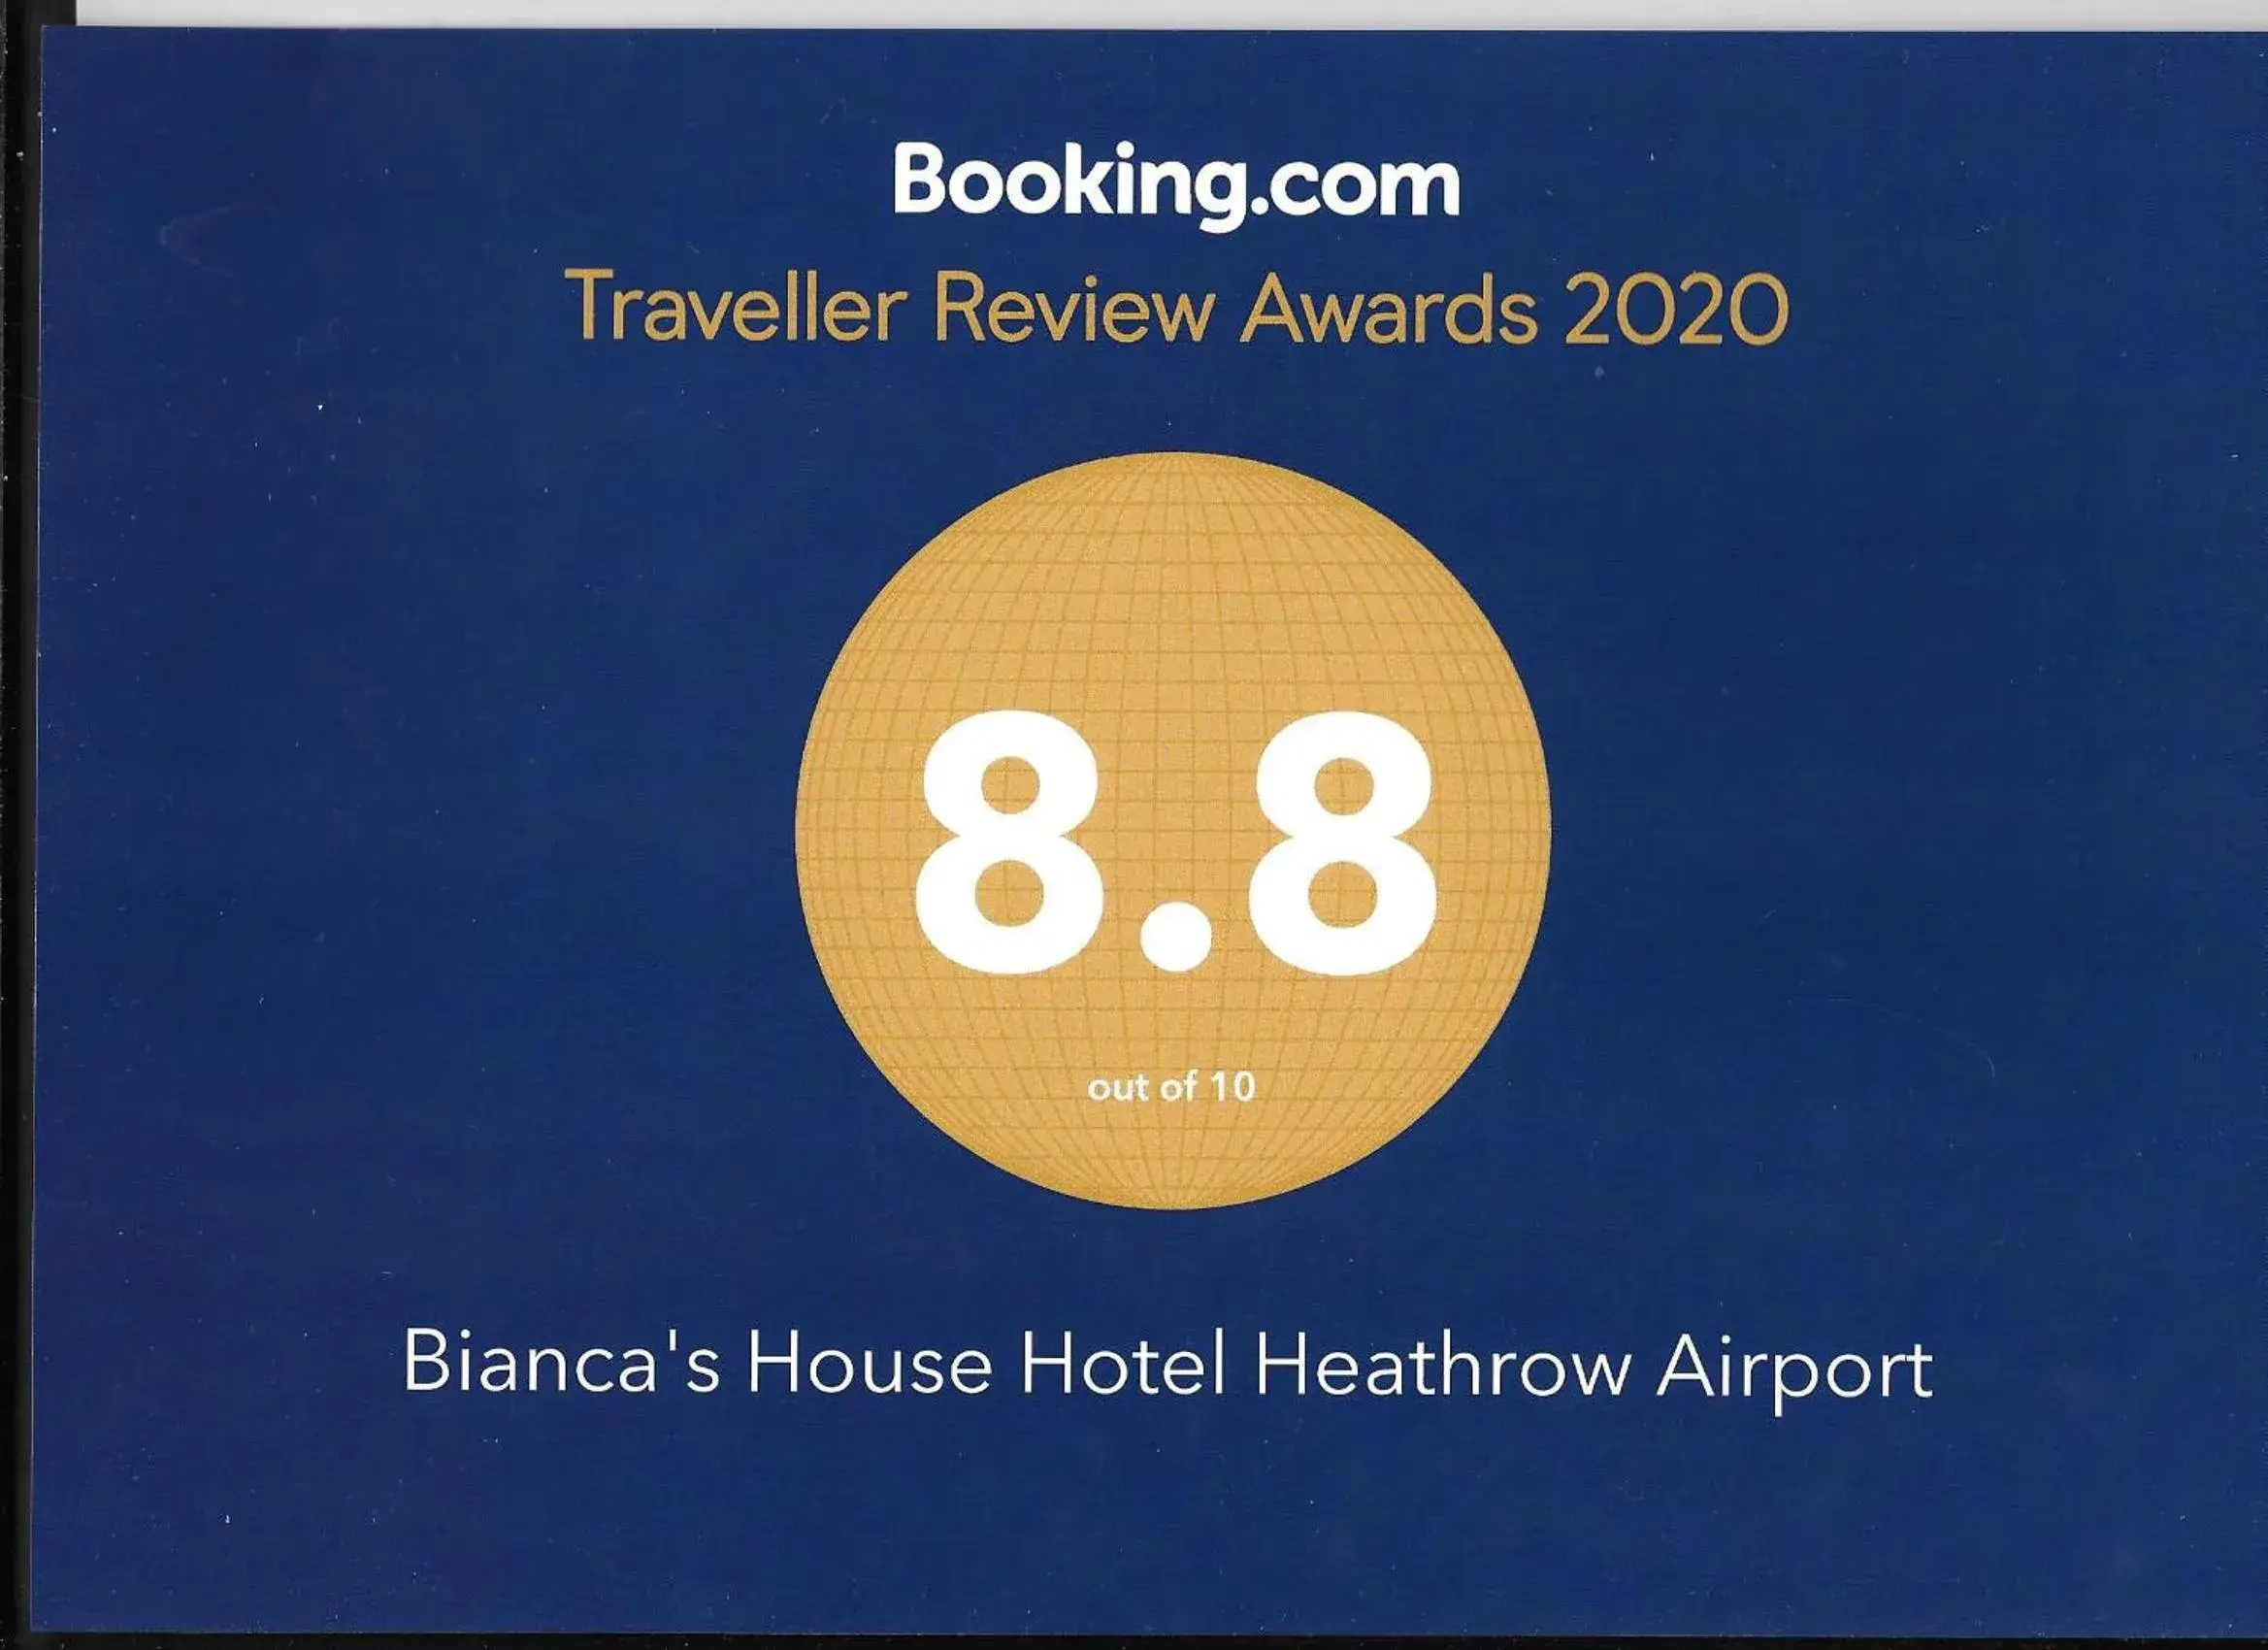 Certificate/Award in Bianca's House Hotel Heathrow Airport